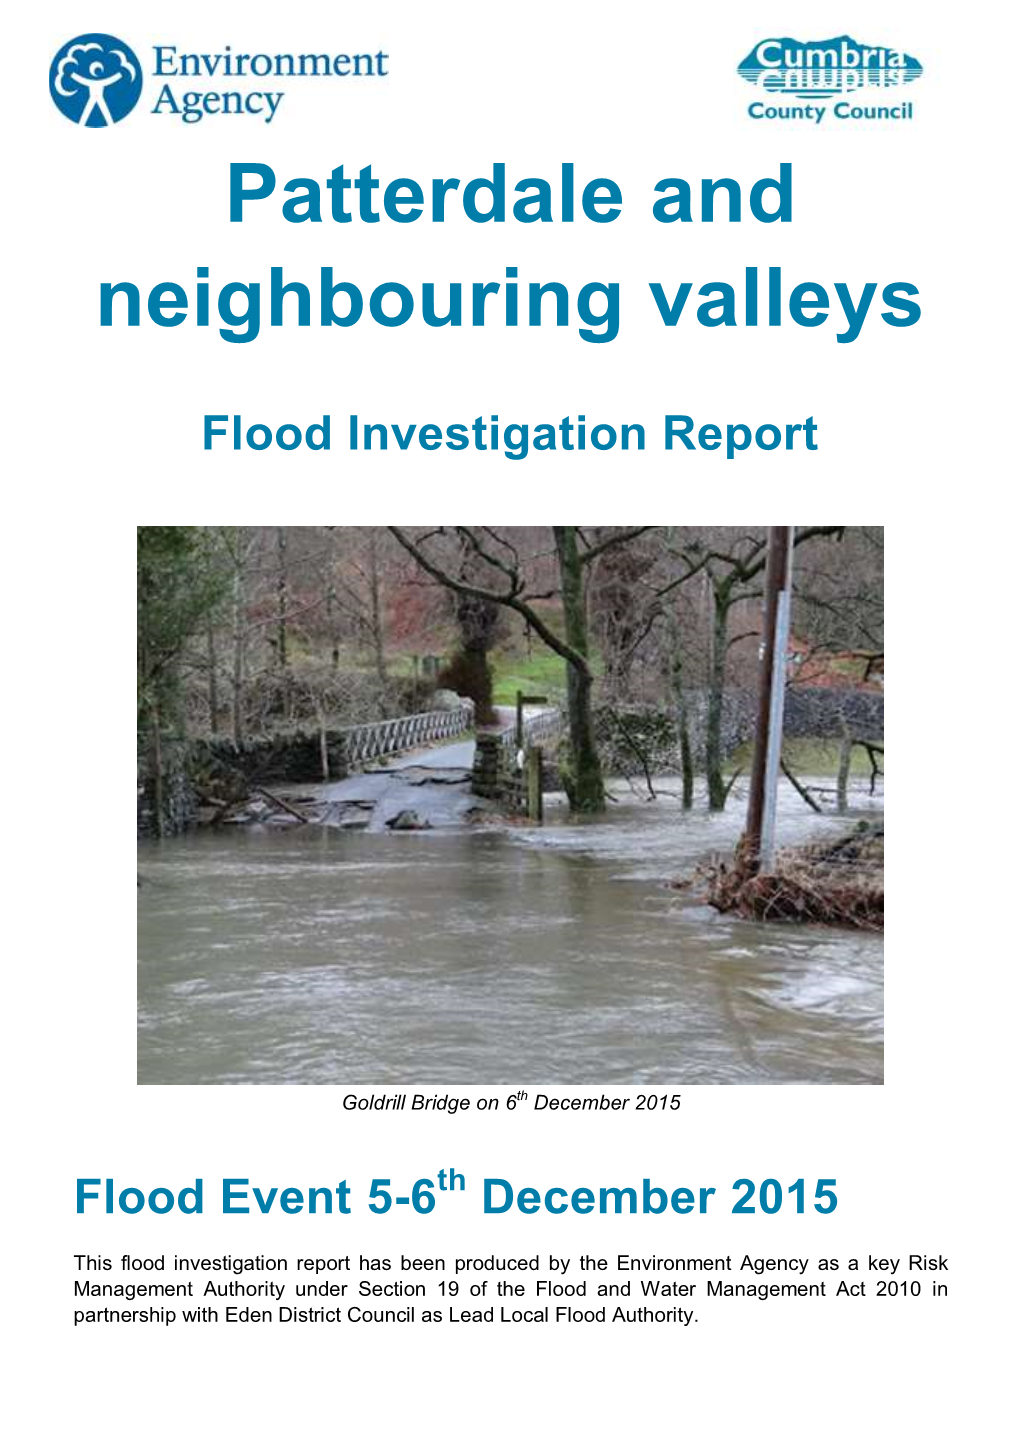 Patterdale Flood Investigation Report